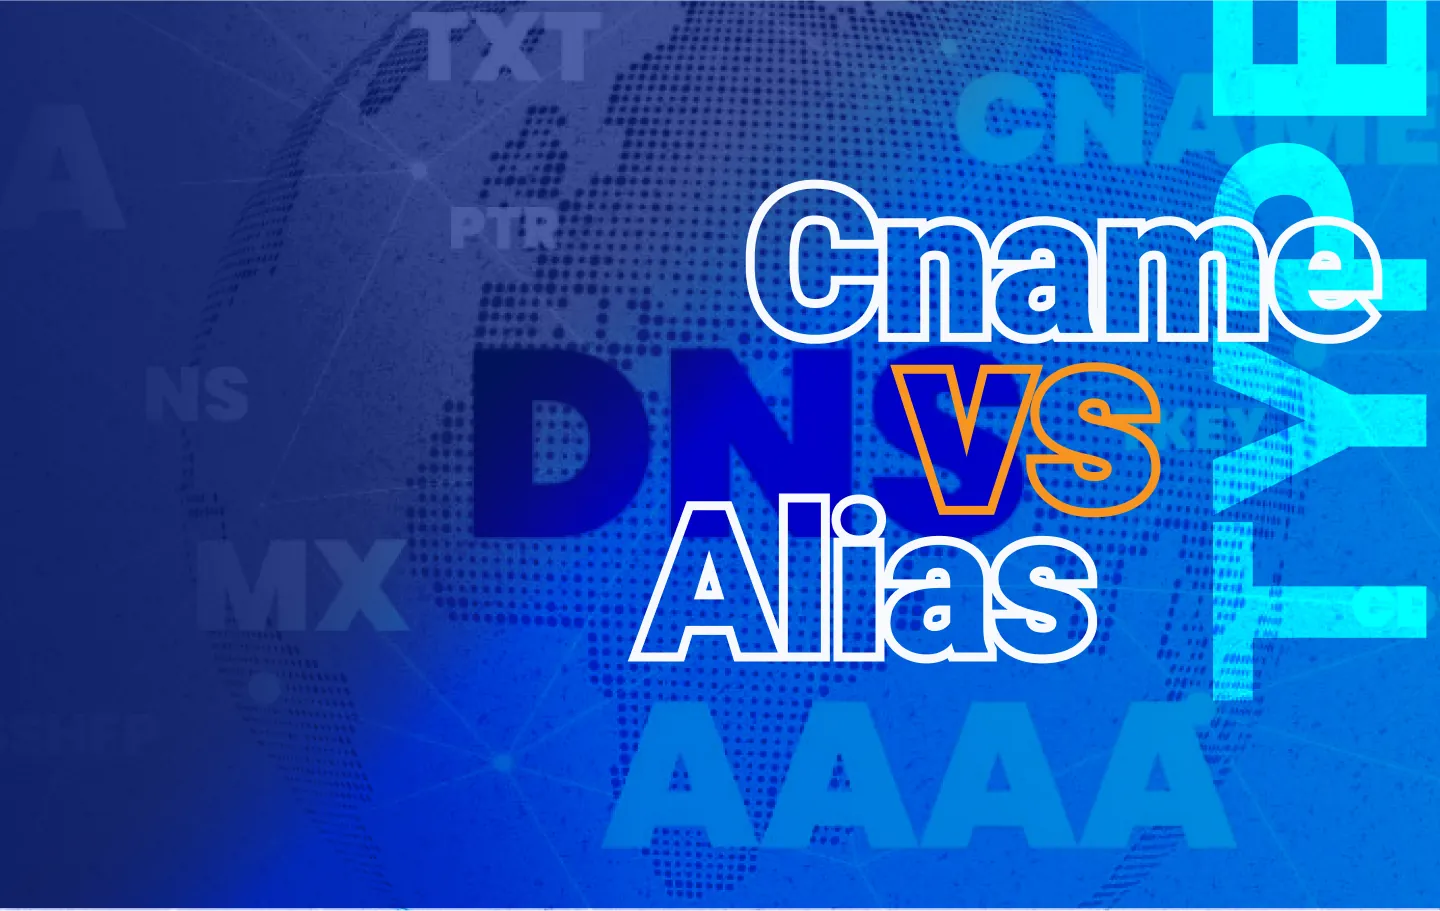 Cname vs Alias written on a blue background